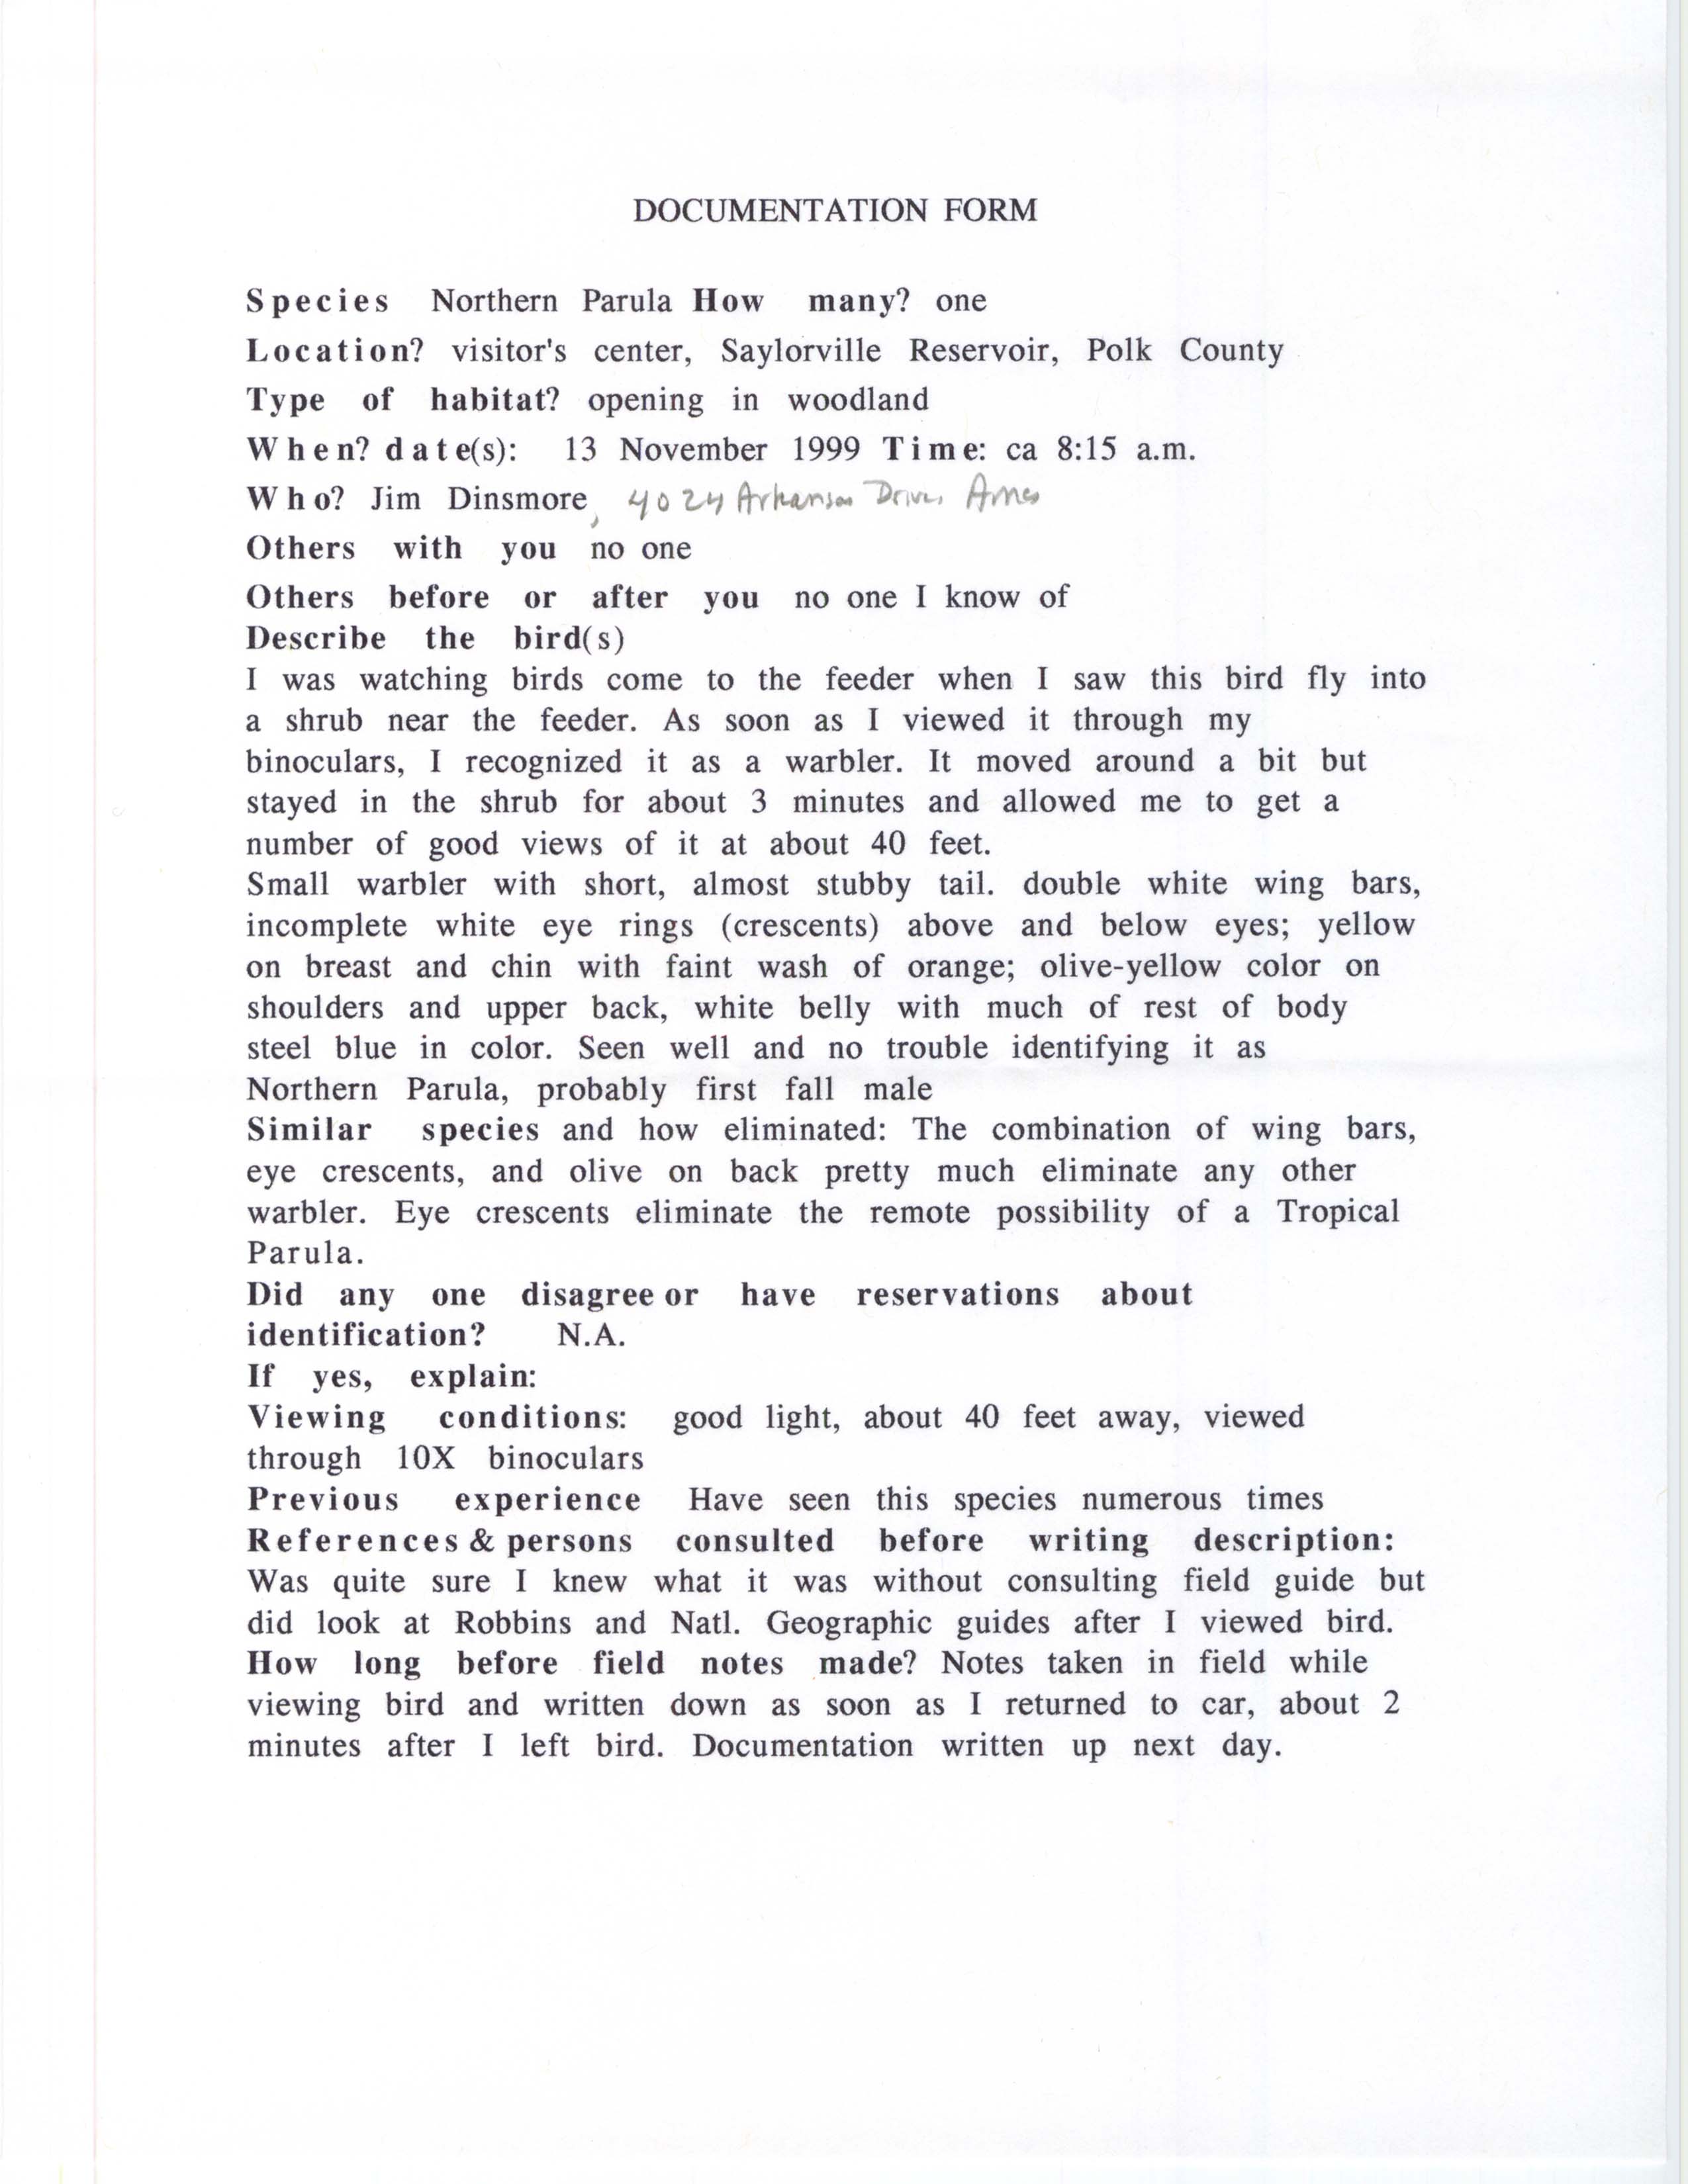 Rare bird documentation form for Northern Parula at Saylorville Reservoir, 1999